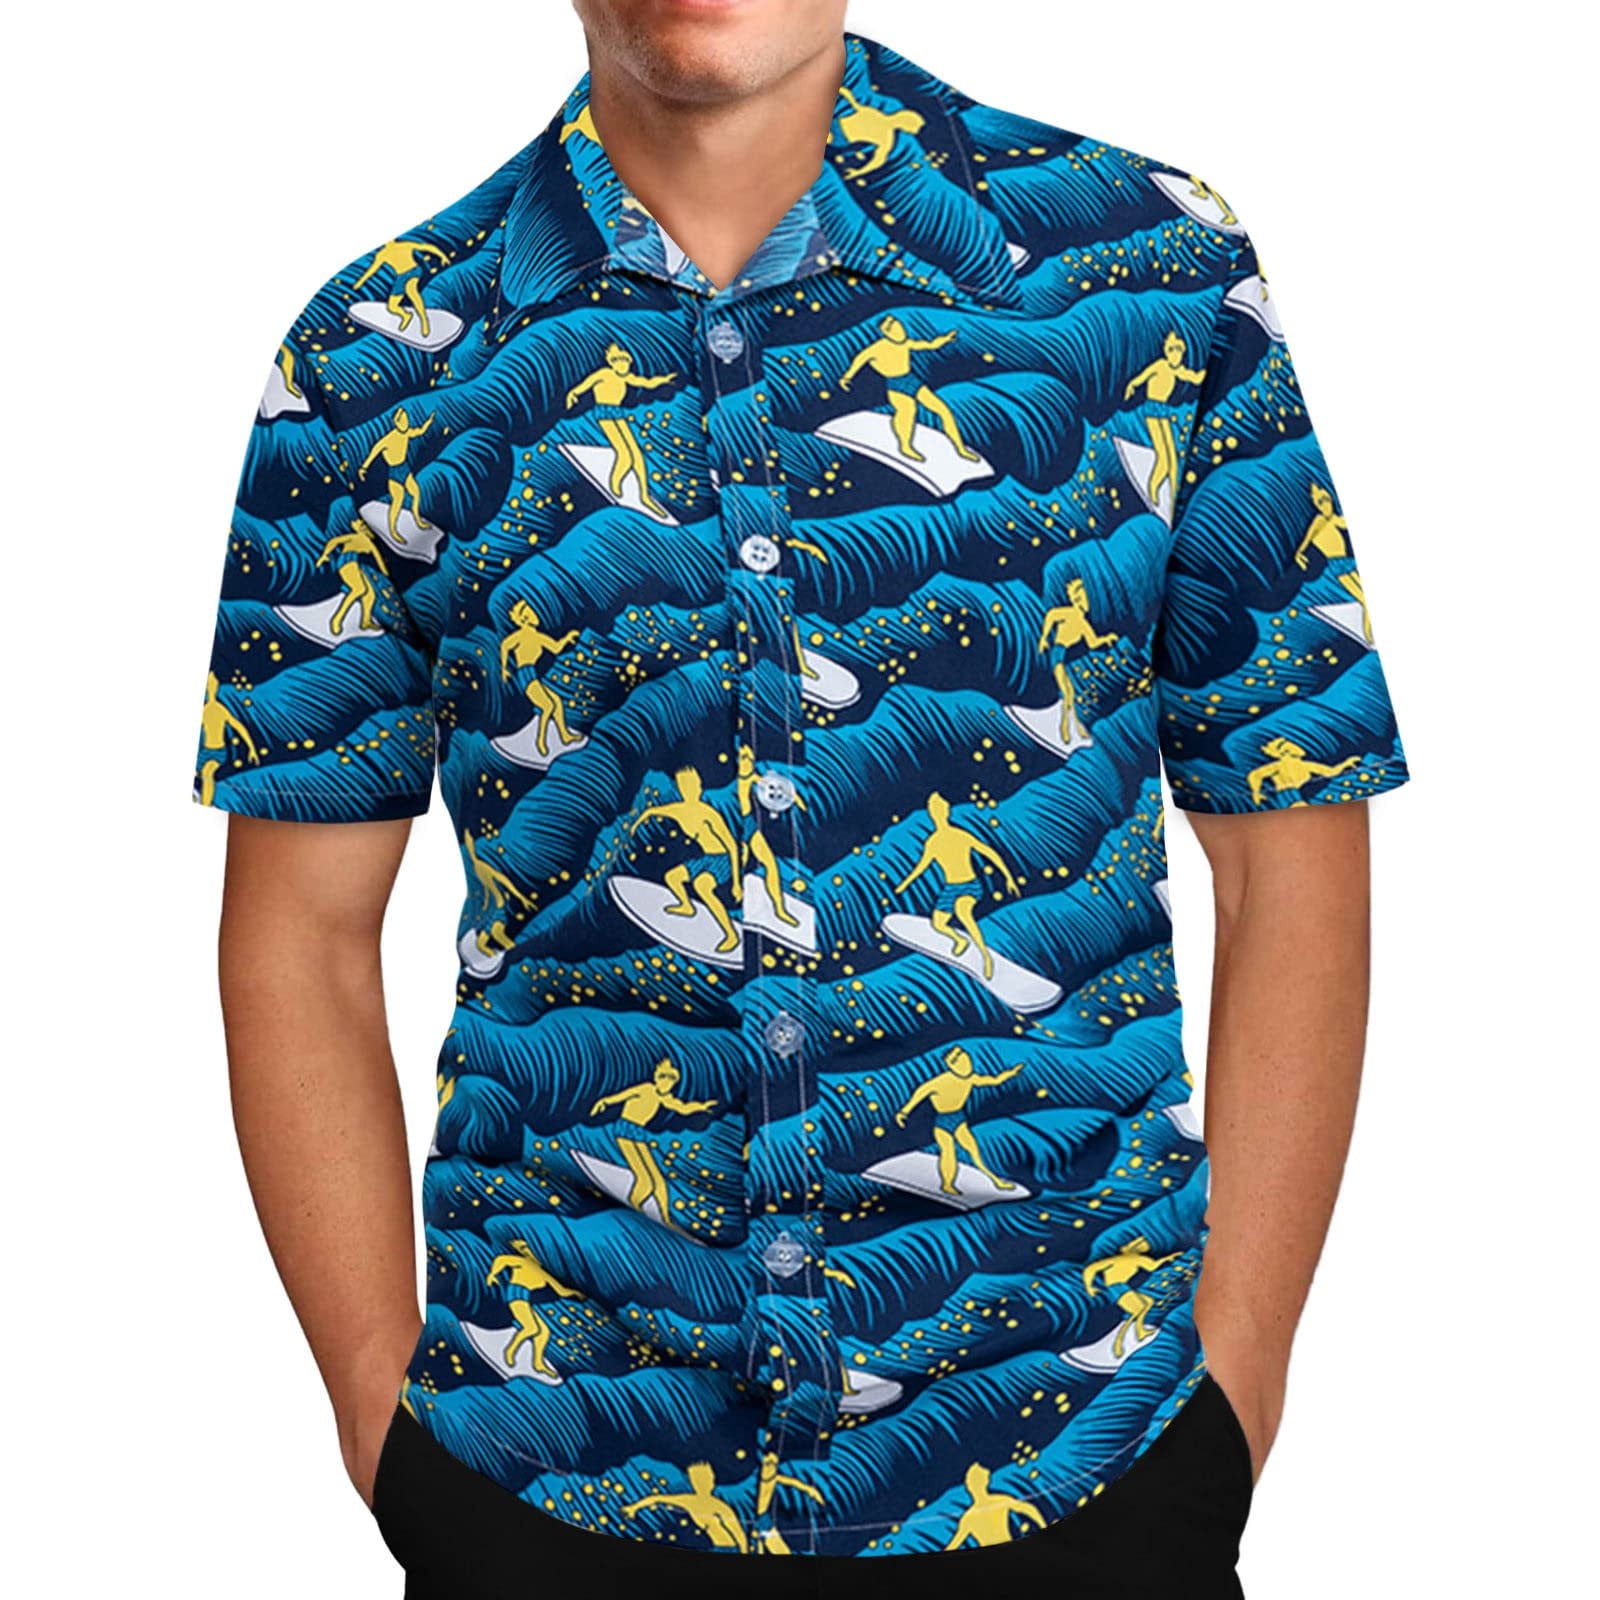 ZCFZJW Men's Hawaiian Shirts Casual Button Down Short Sleeve Aloha Beach  Dress Shirt Funny Pattern Print Holiday Tropical T-Shirts Dark Blue XXXXXL  